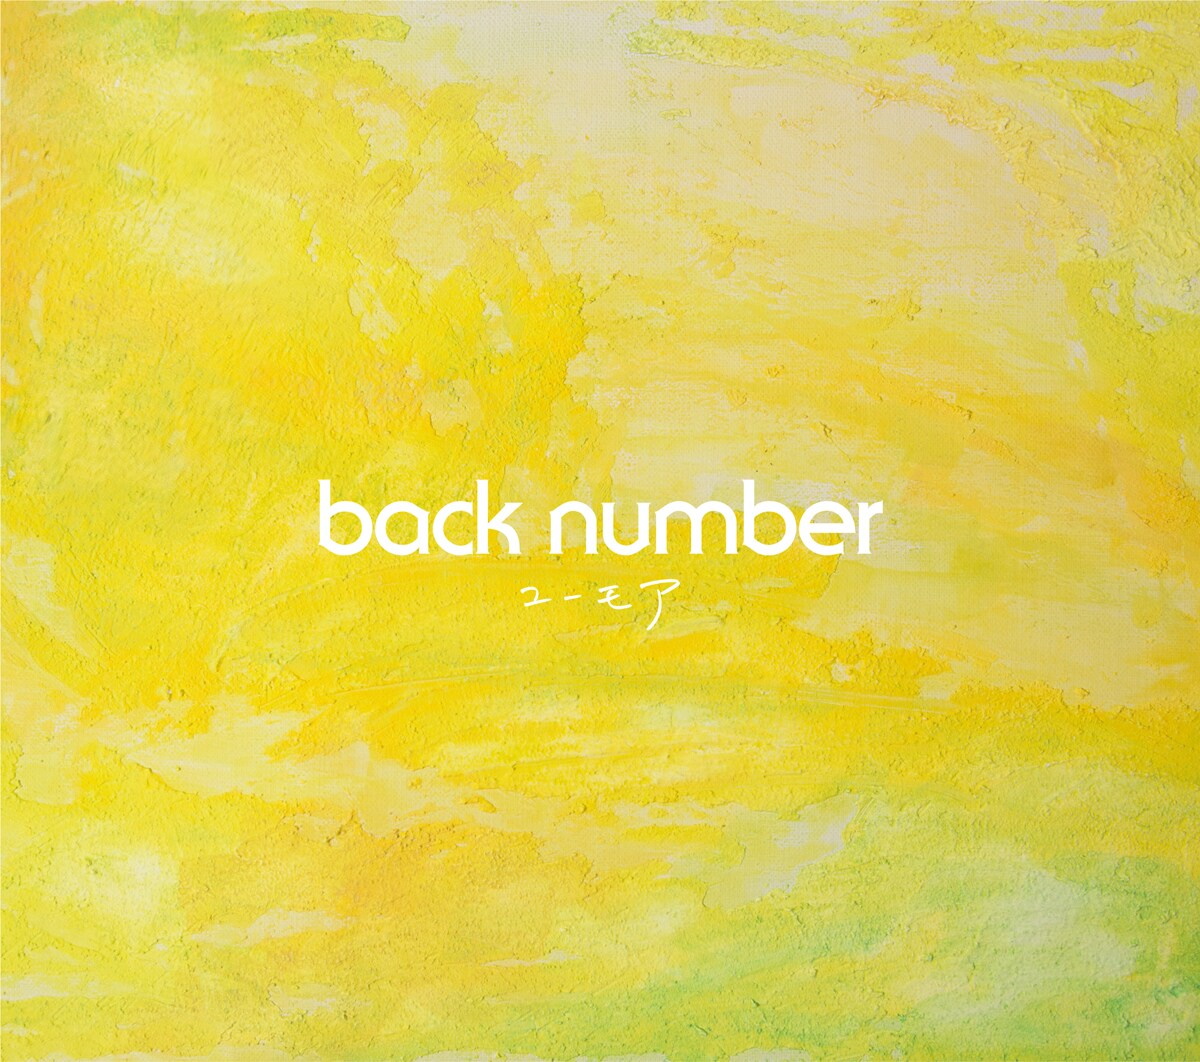 『back number - 秘密のキス』収録の『ユーモア』ジャケット